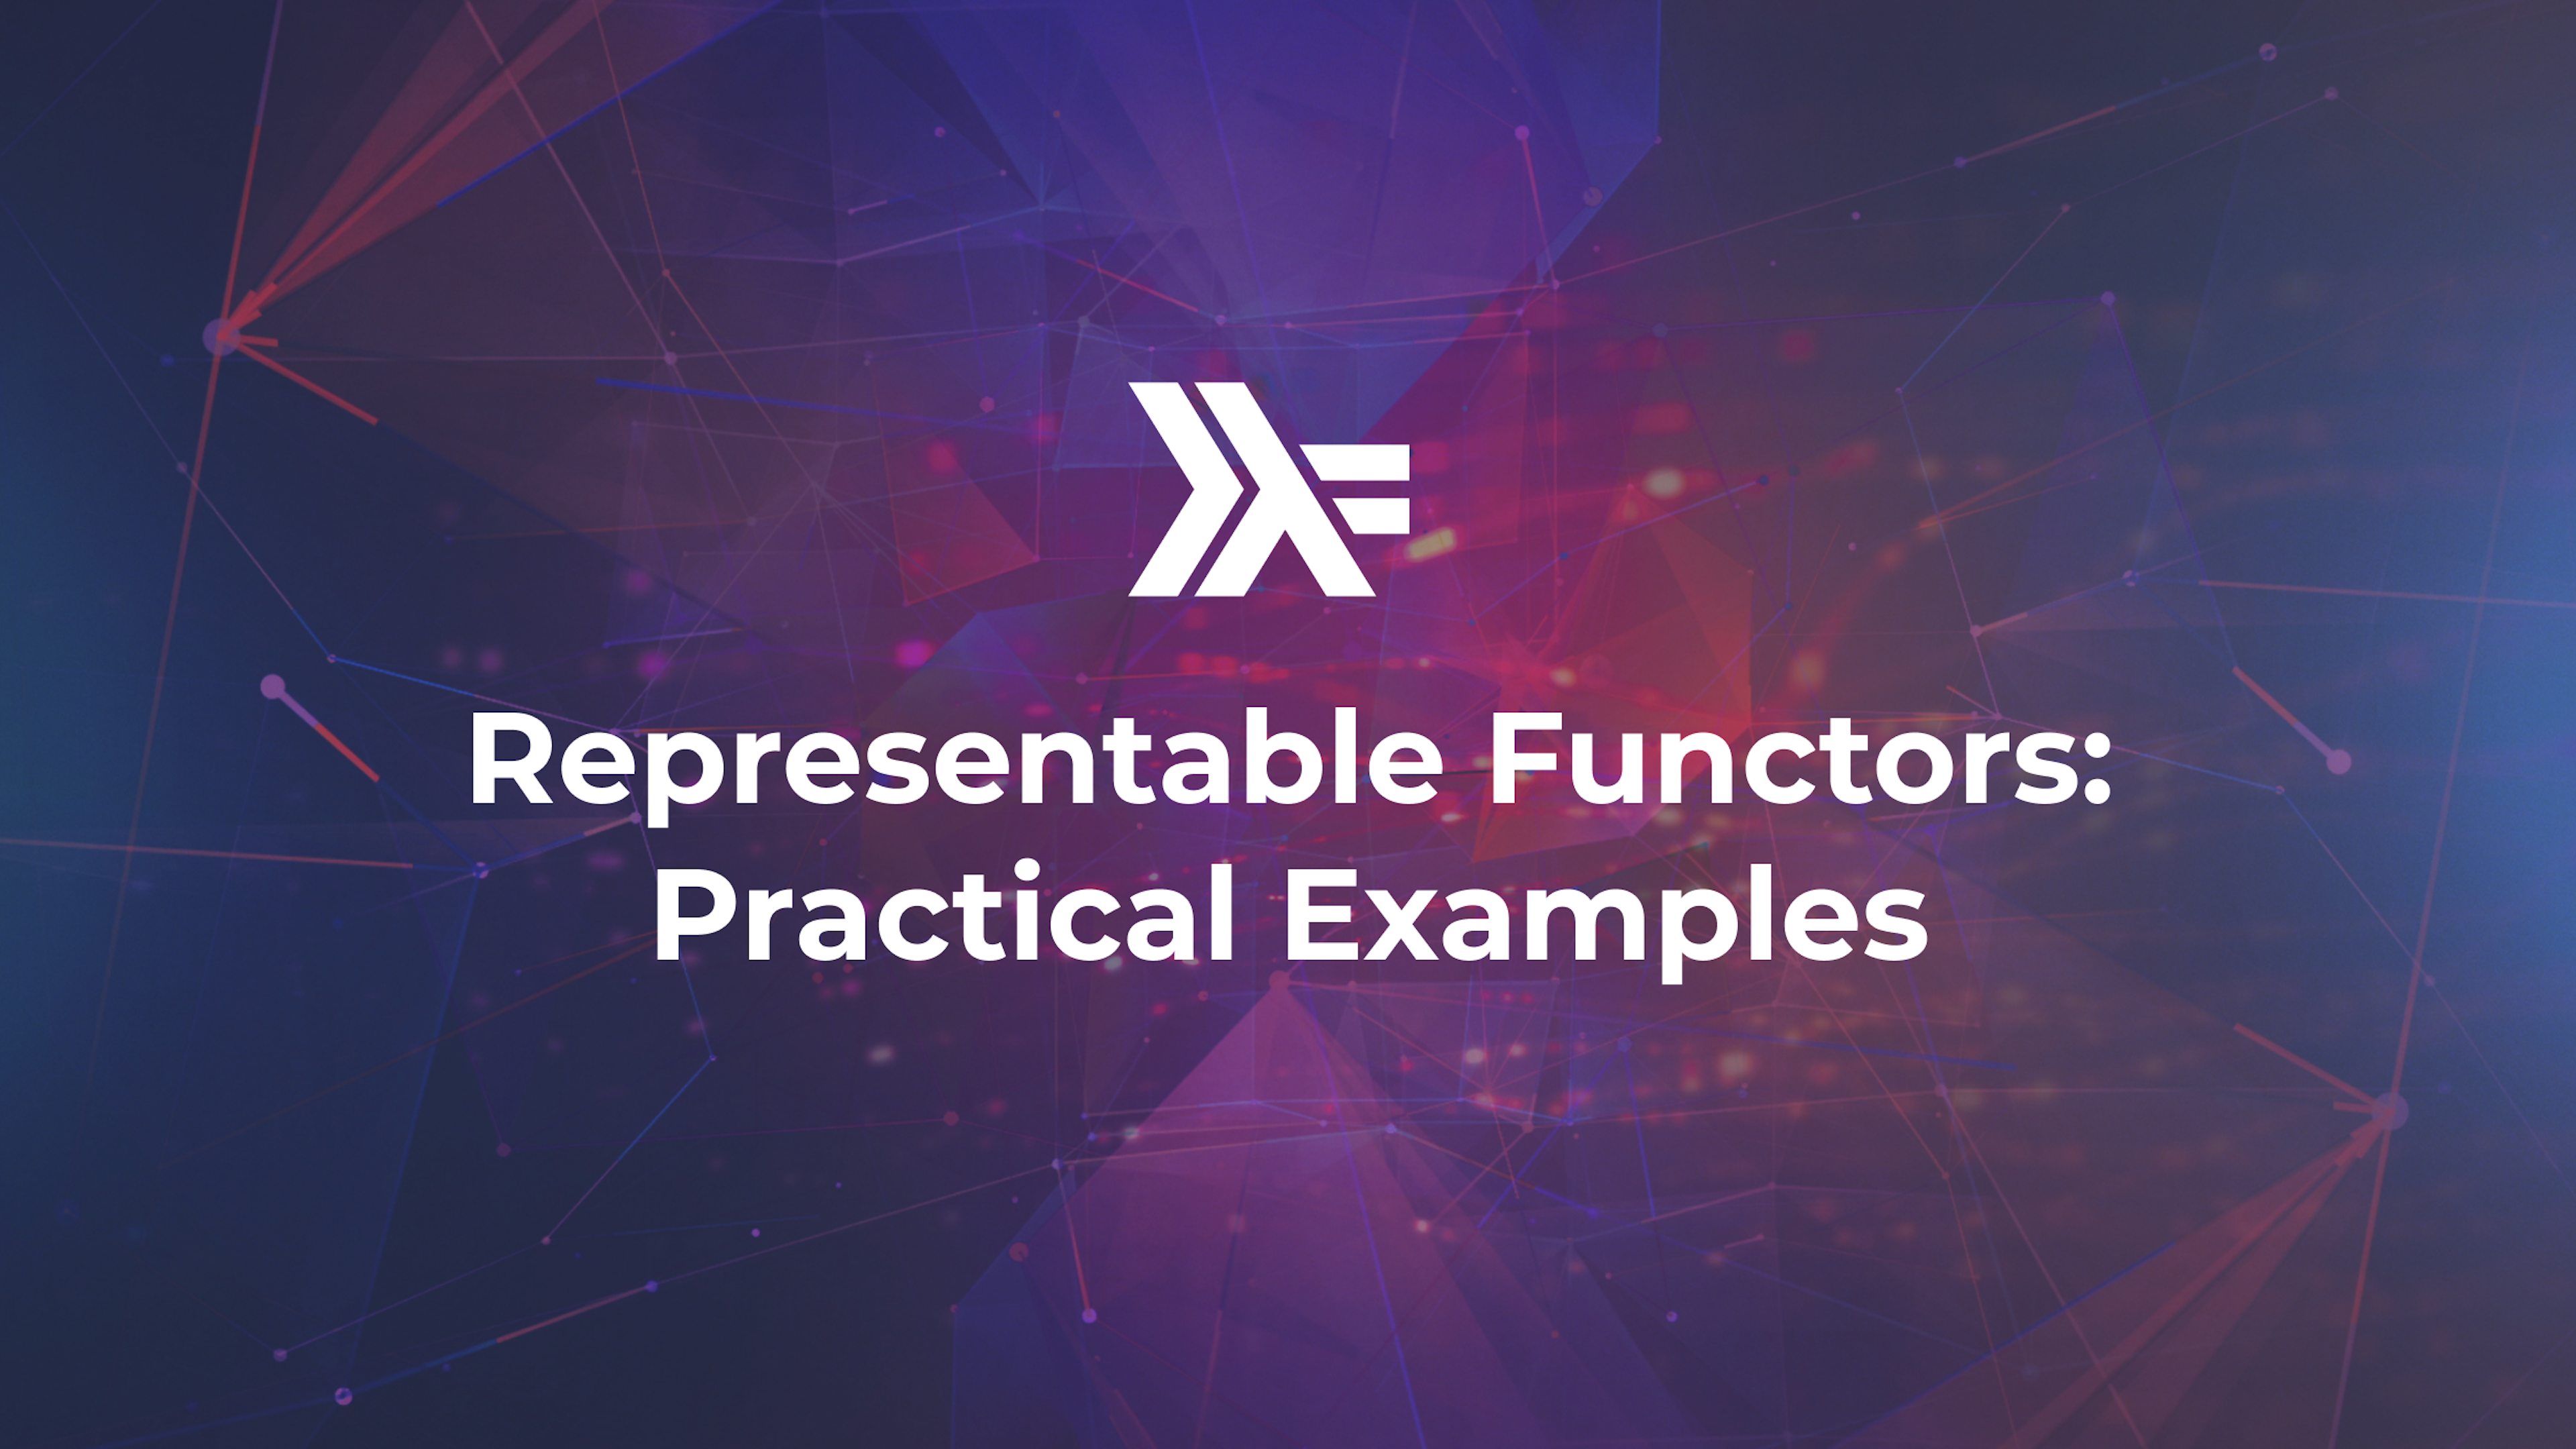 Representable Functors: Practical Examples